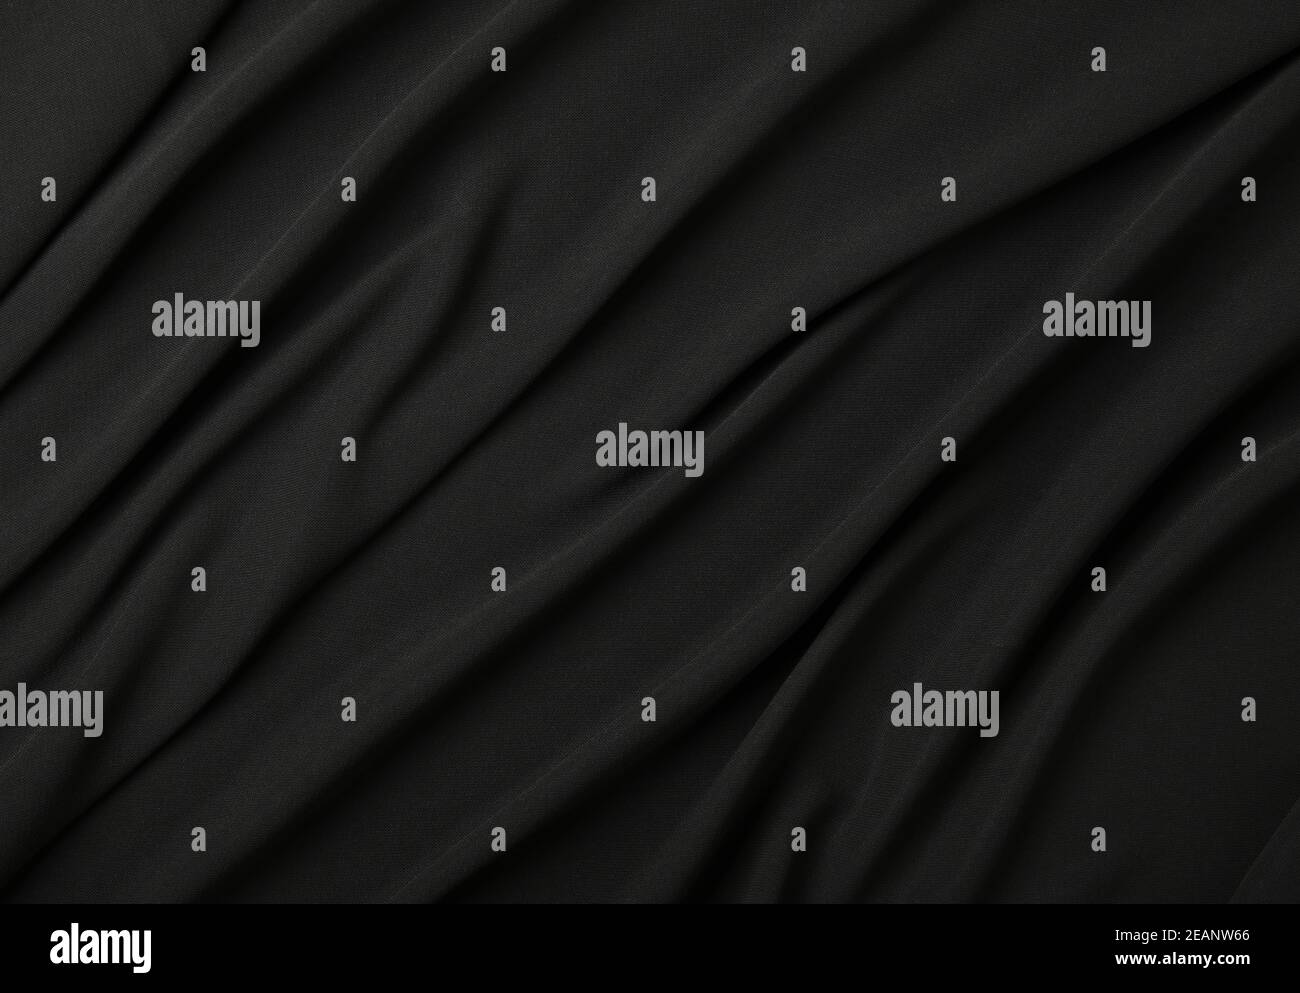 Background of black textile folded pleats Stock Photo